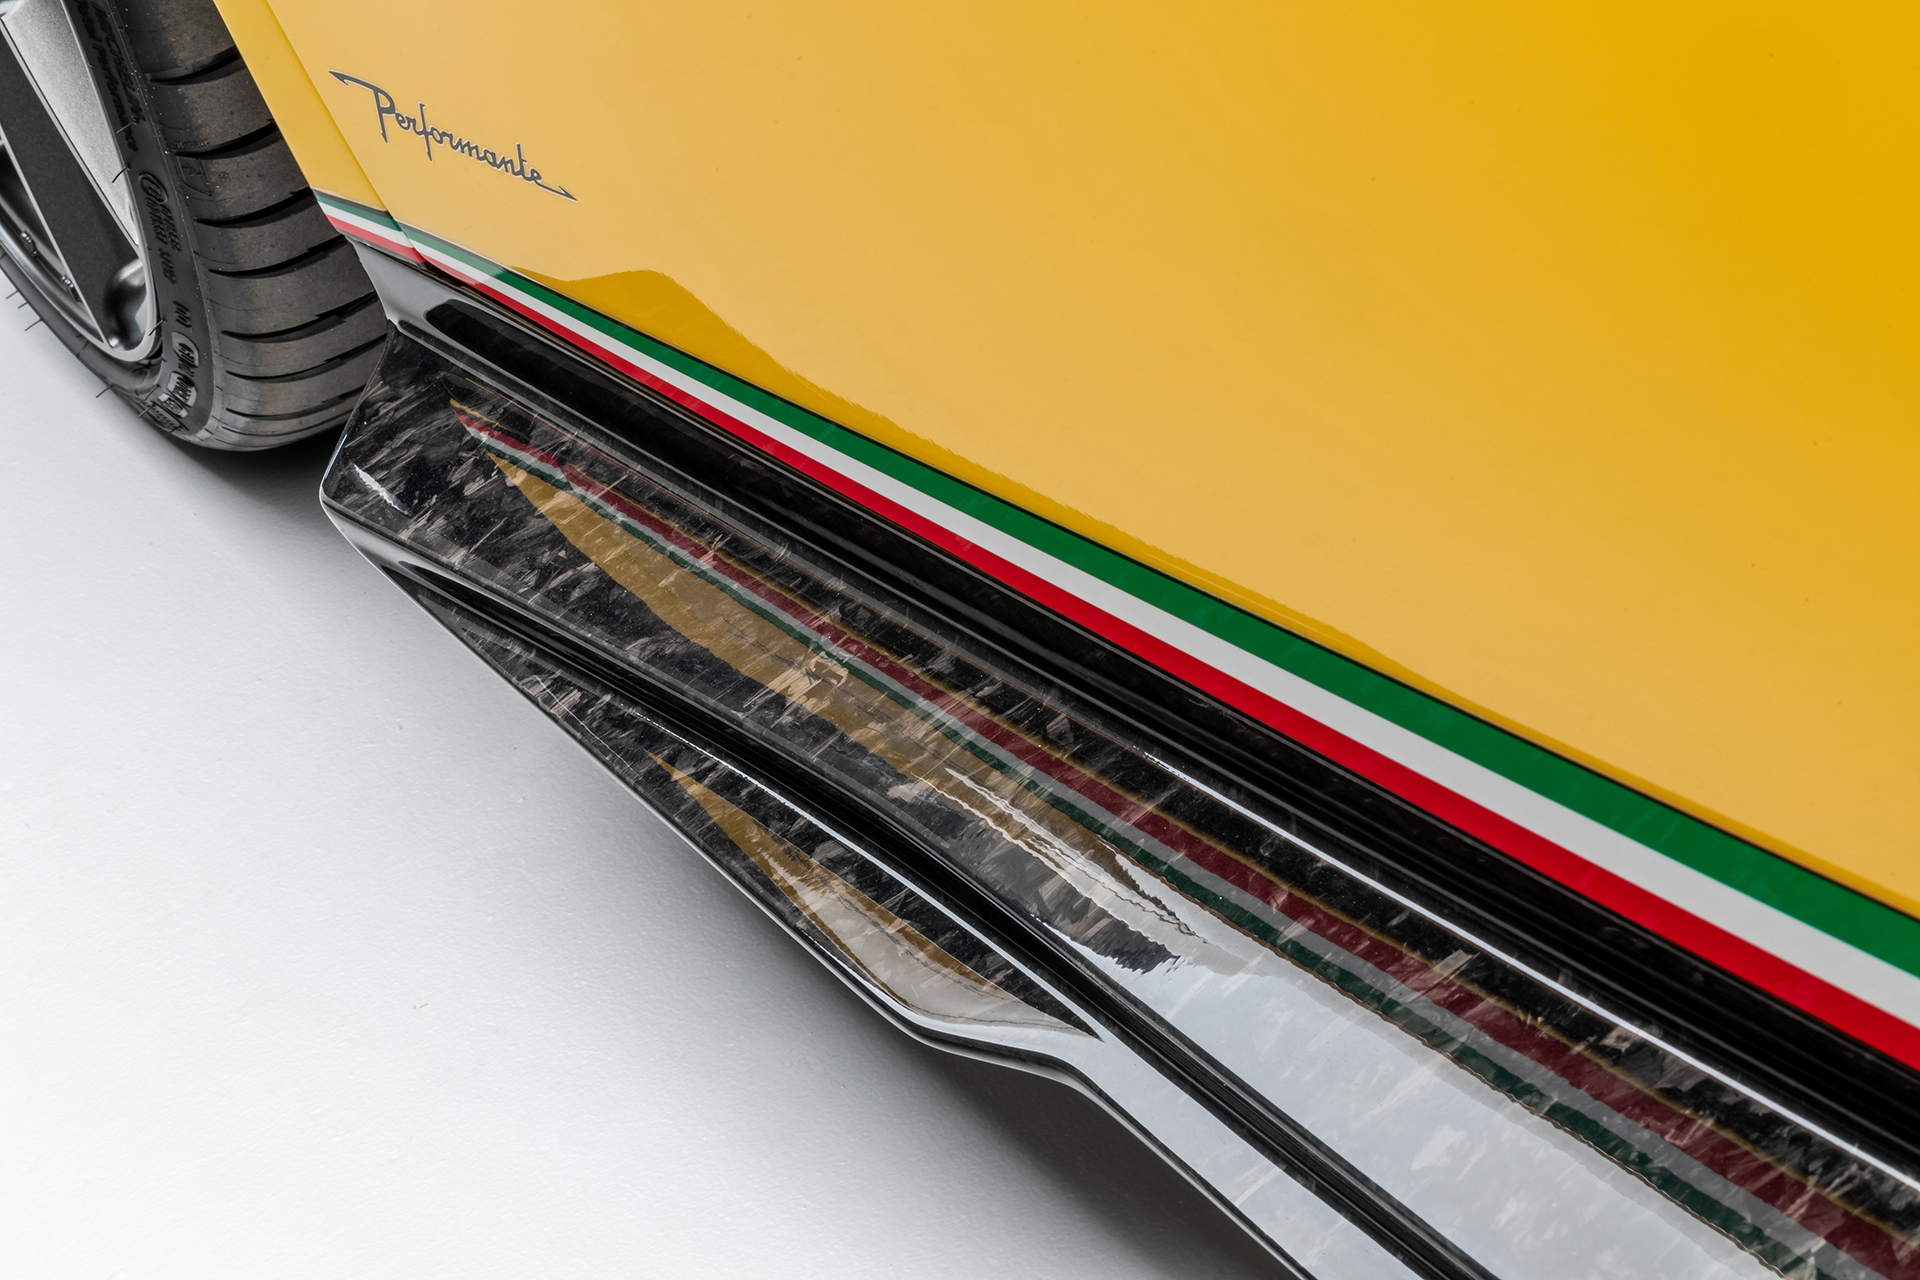 Vorsteiner Nero body kit for Lamborghini Huracan Vincenzo new model